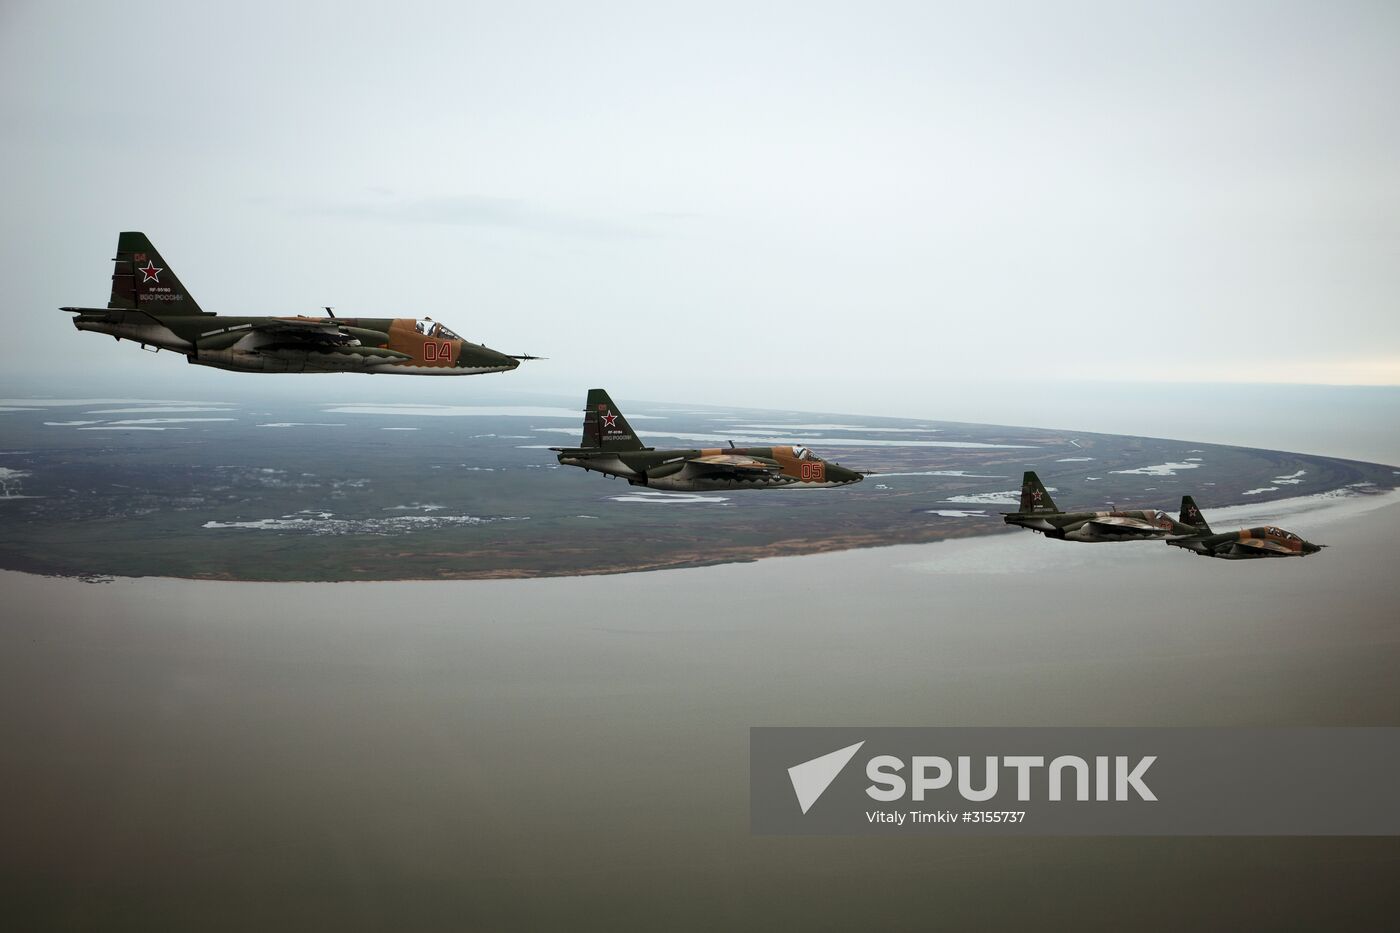 Flight training of Sukhoi SU-25 crews in Primorsko-Akhtarsk